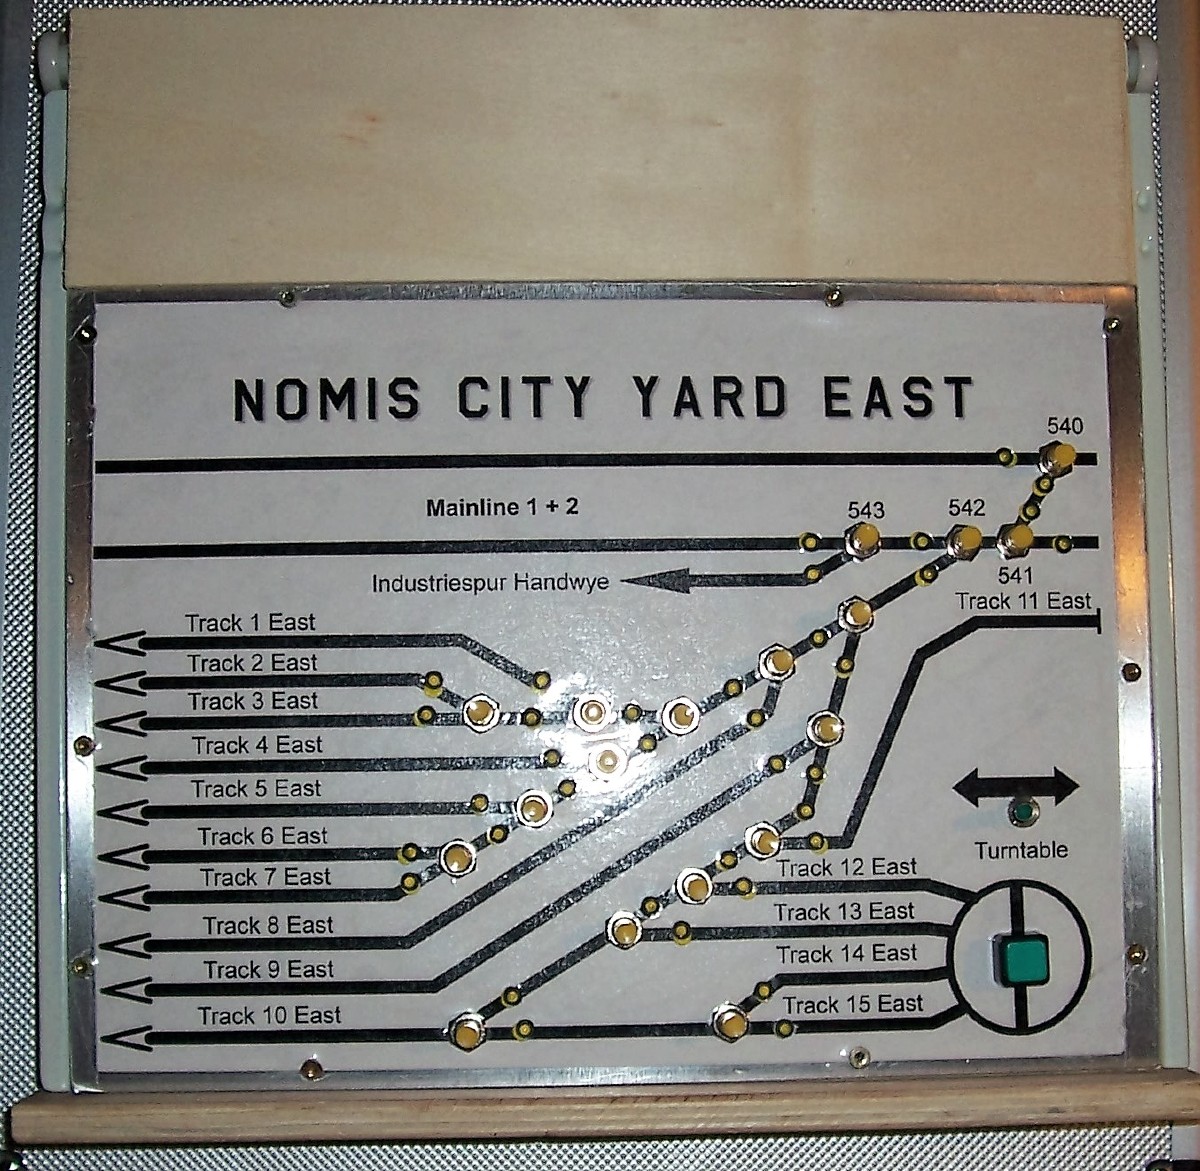 Nomis City Yard East